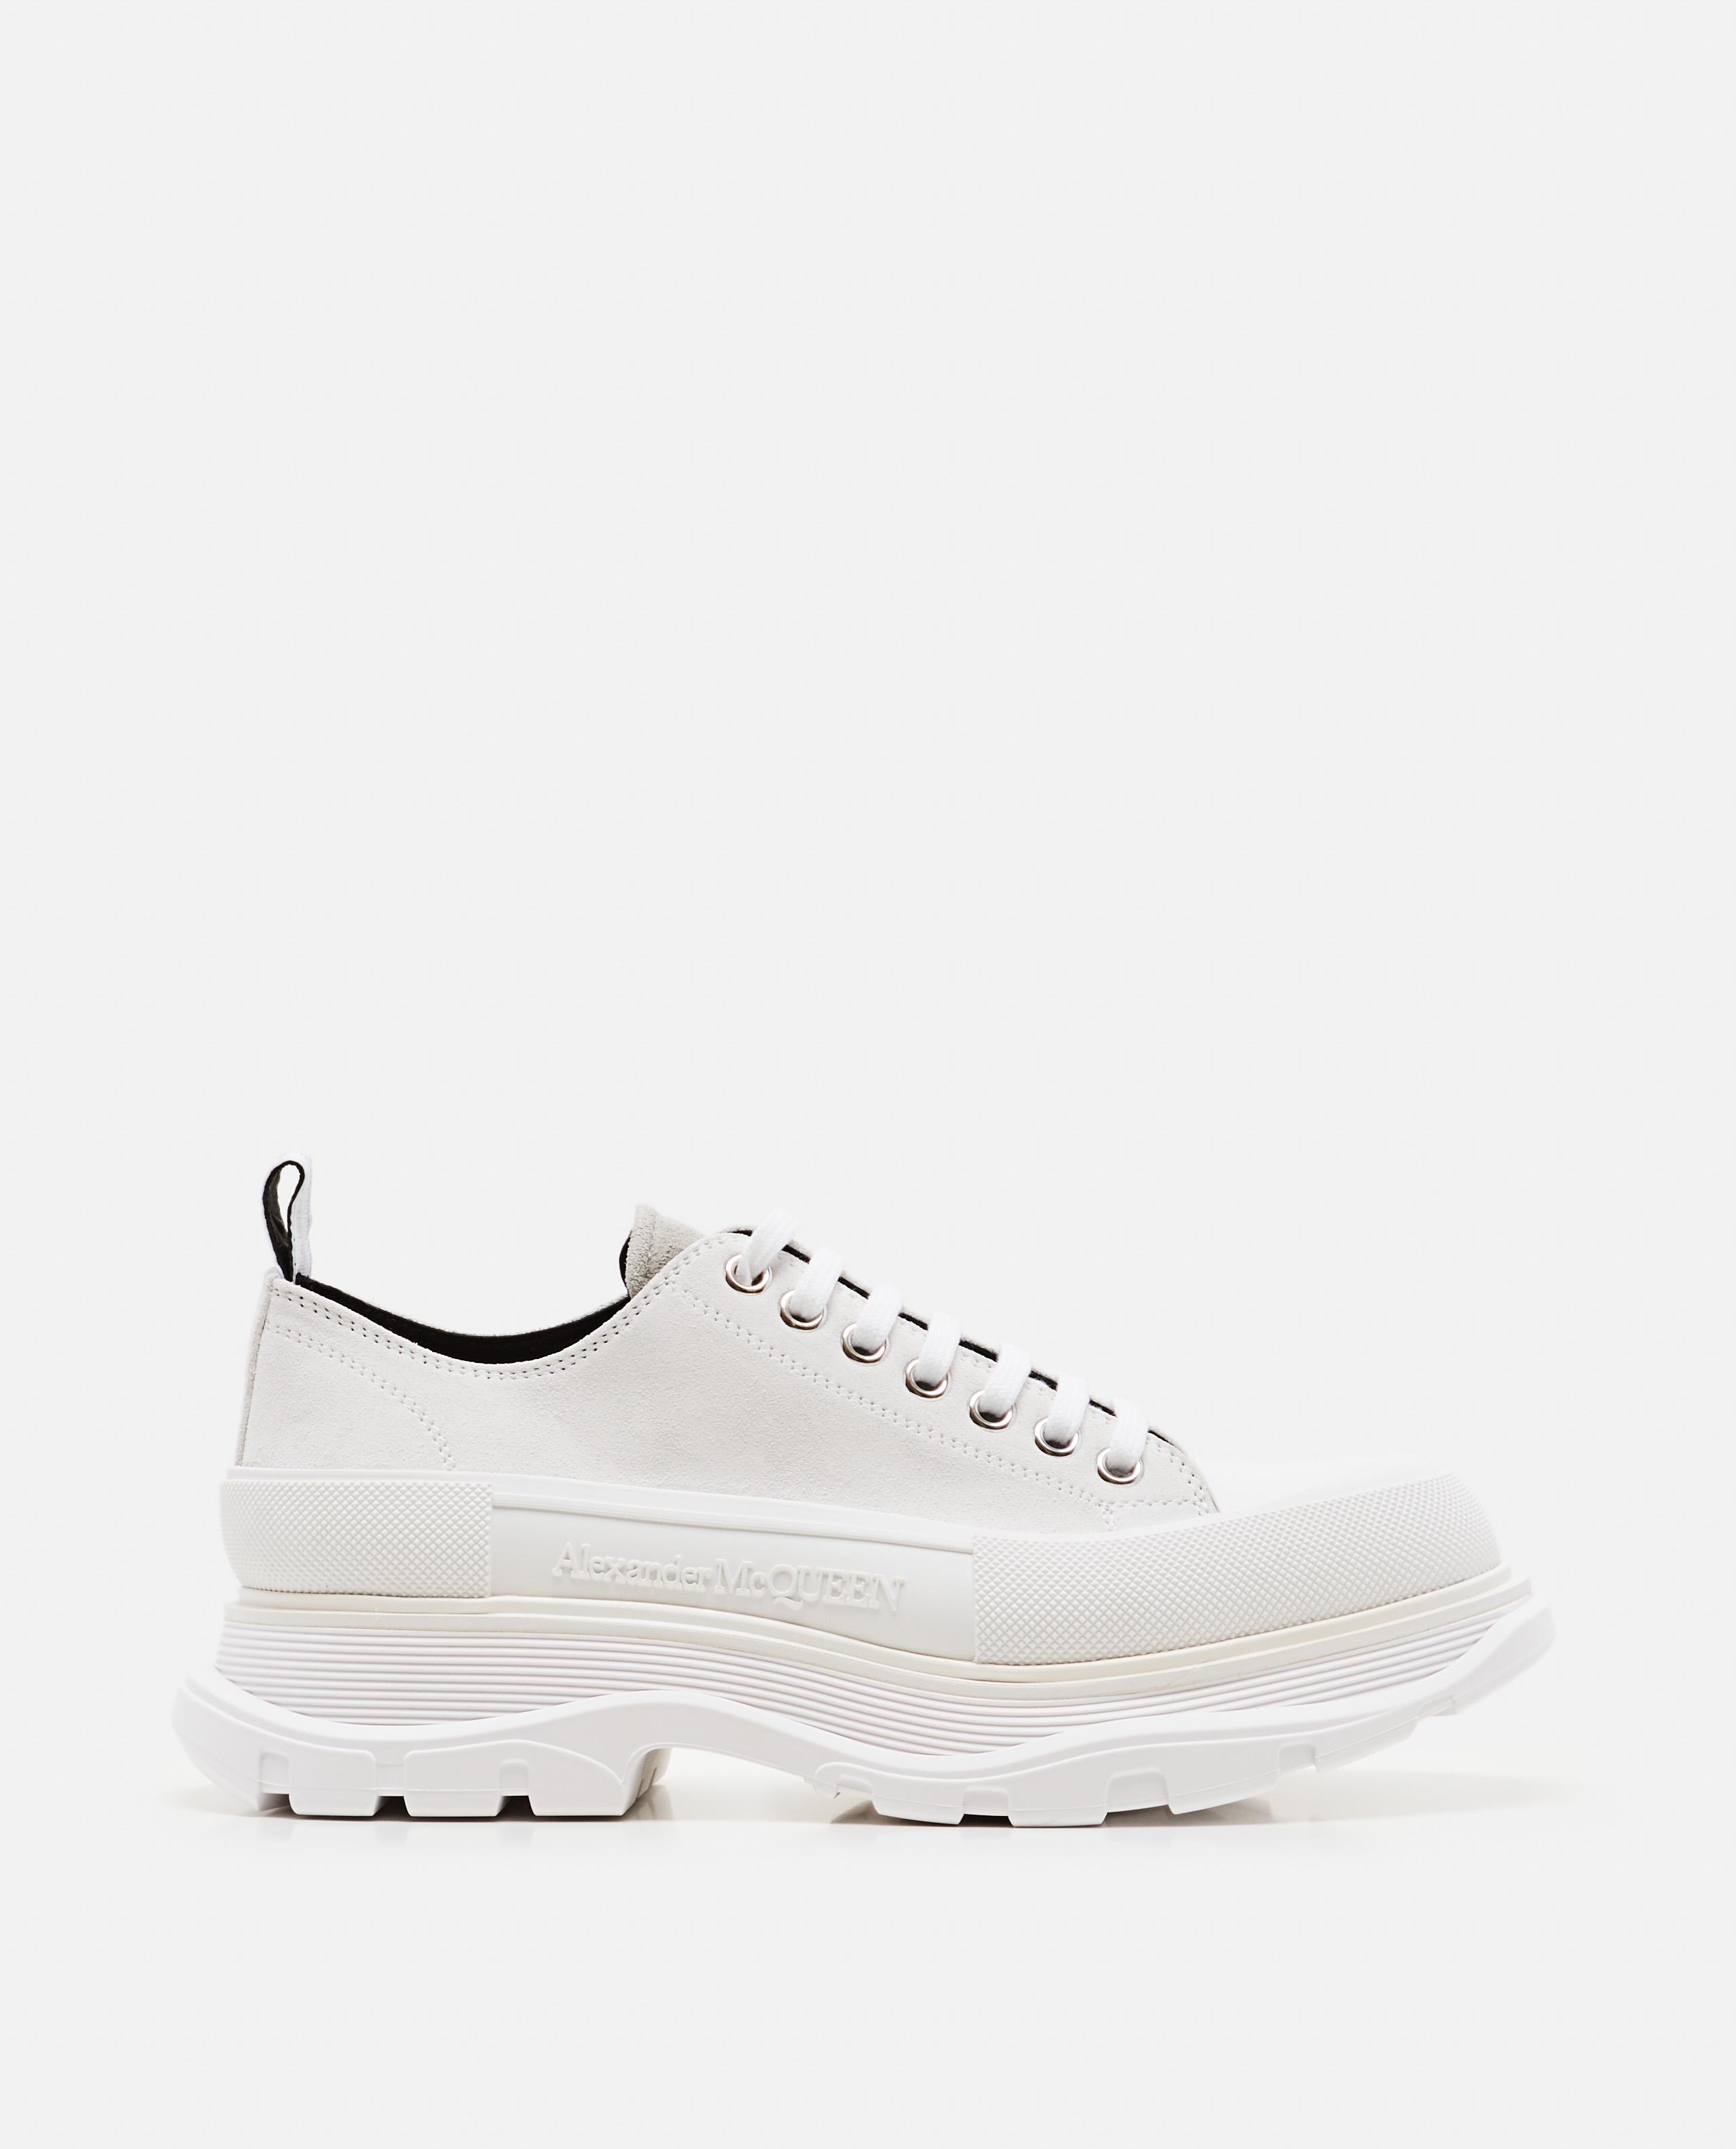 Alexander McQueen Chunky Sneakers in White for Men - Lyst